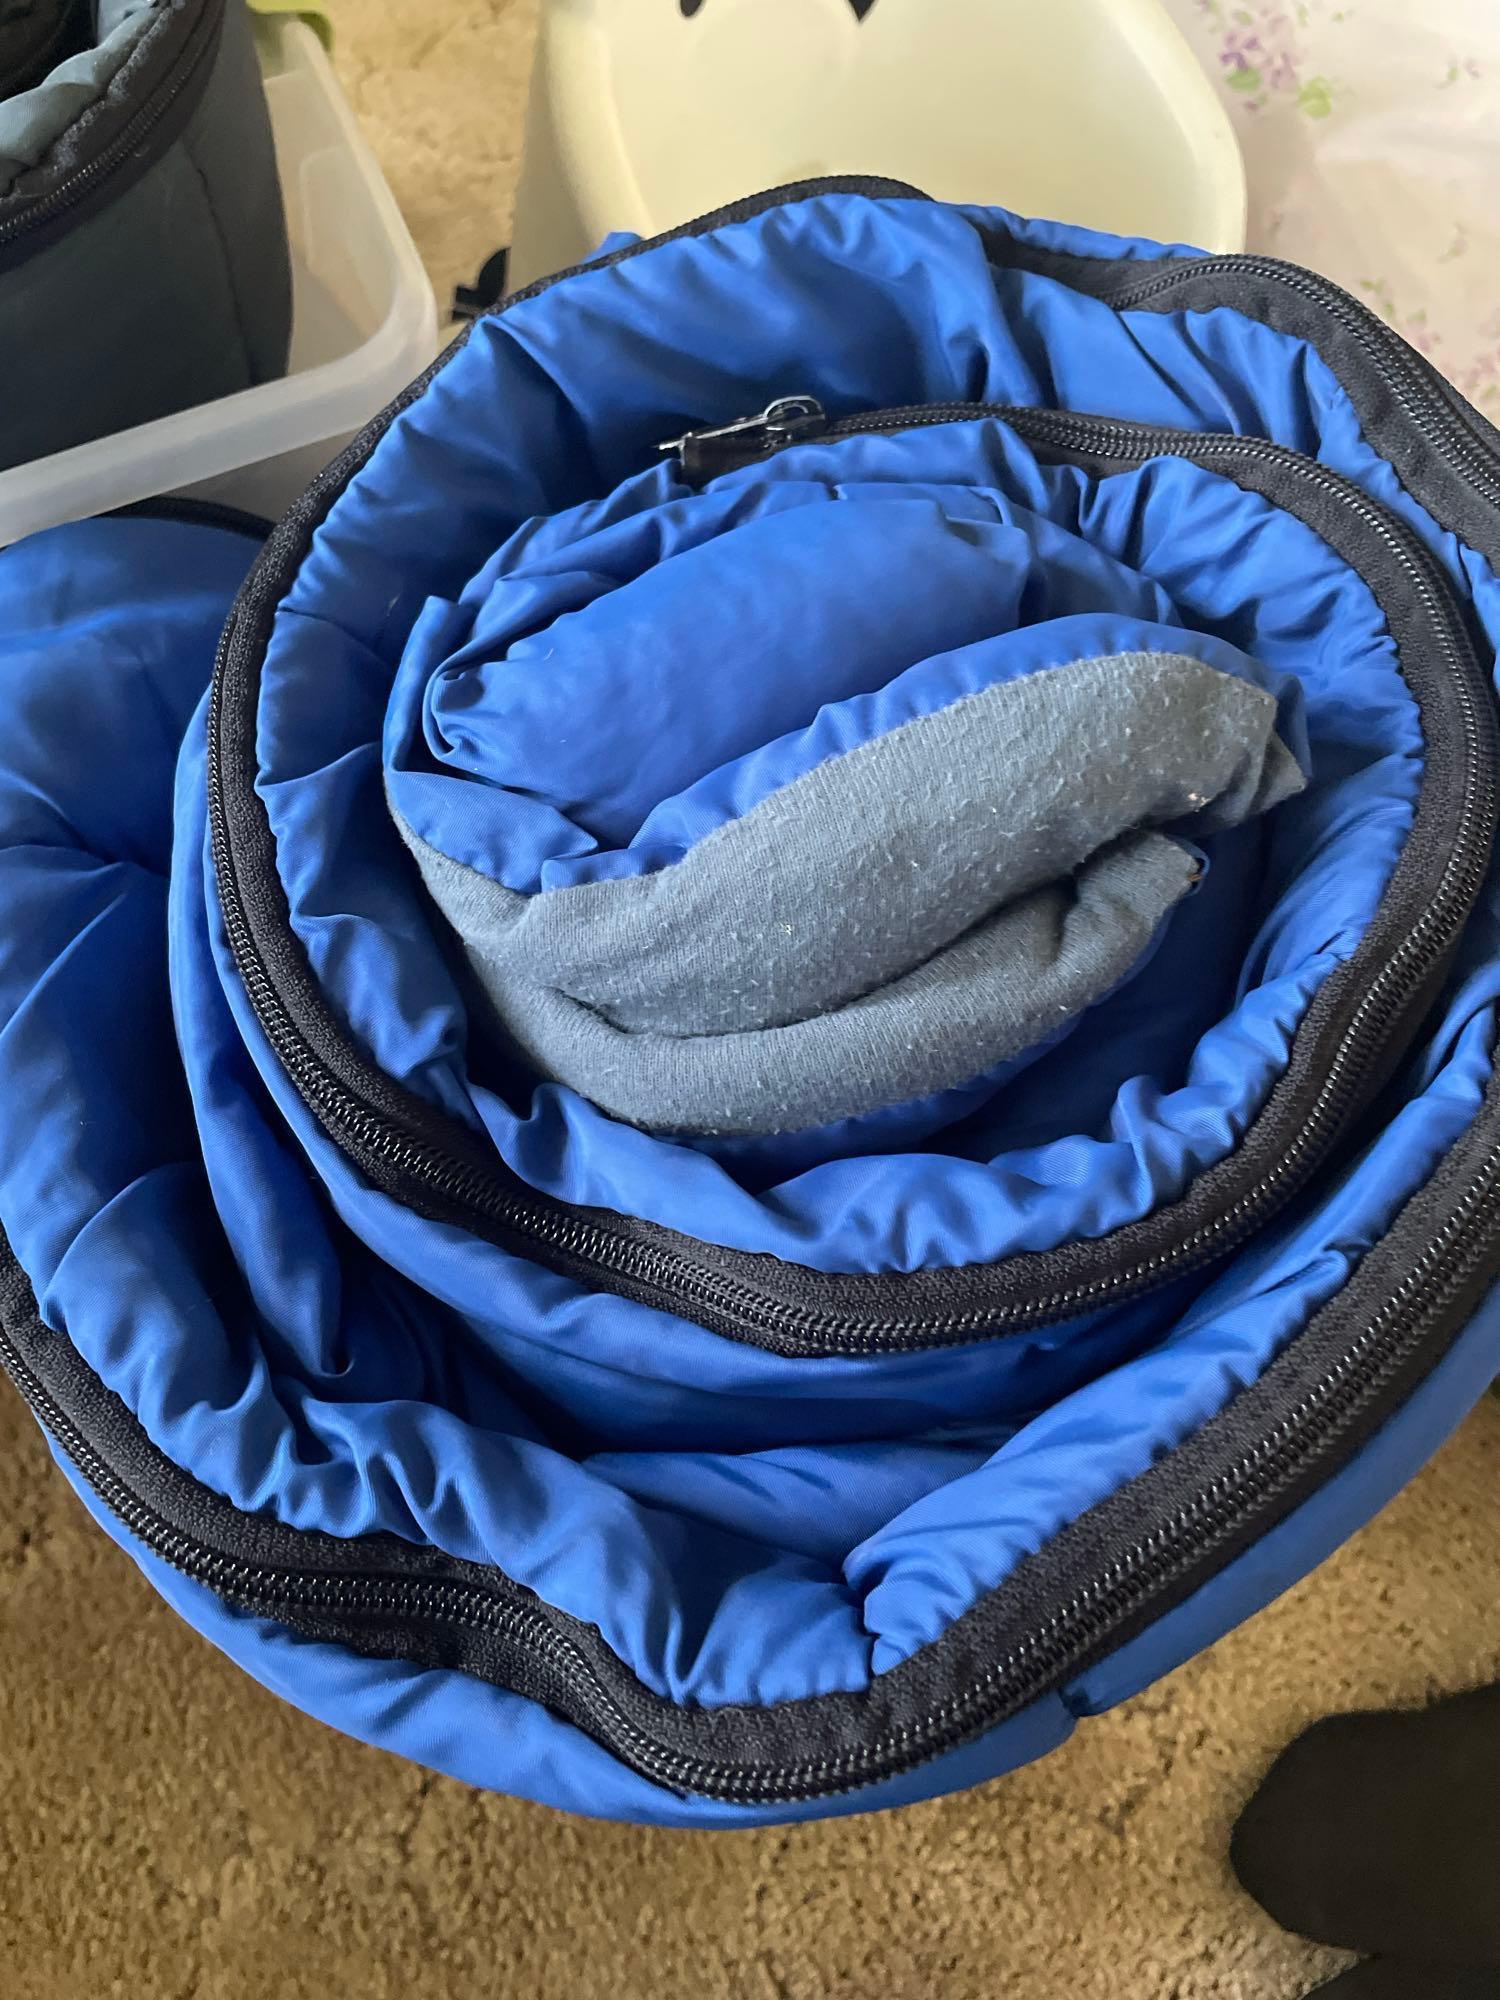 box of sleeping bags